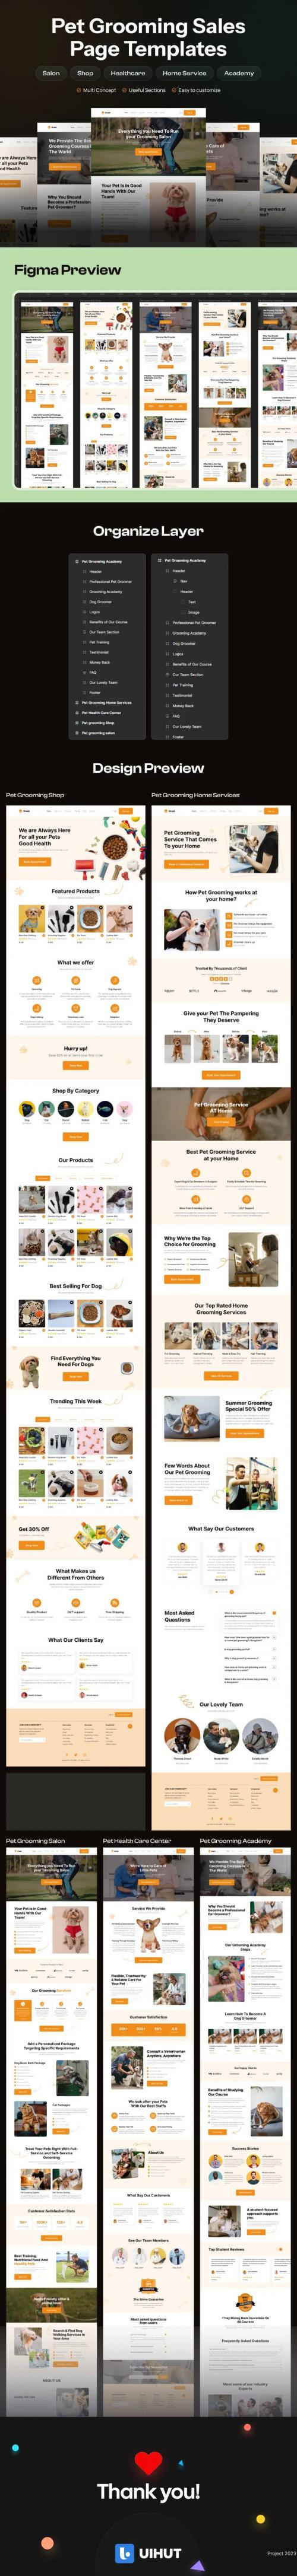 UIHut - Pet Grooming Businesses Templates - 25767